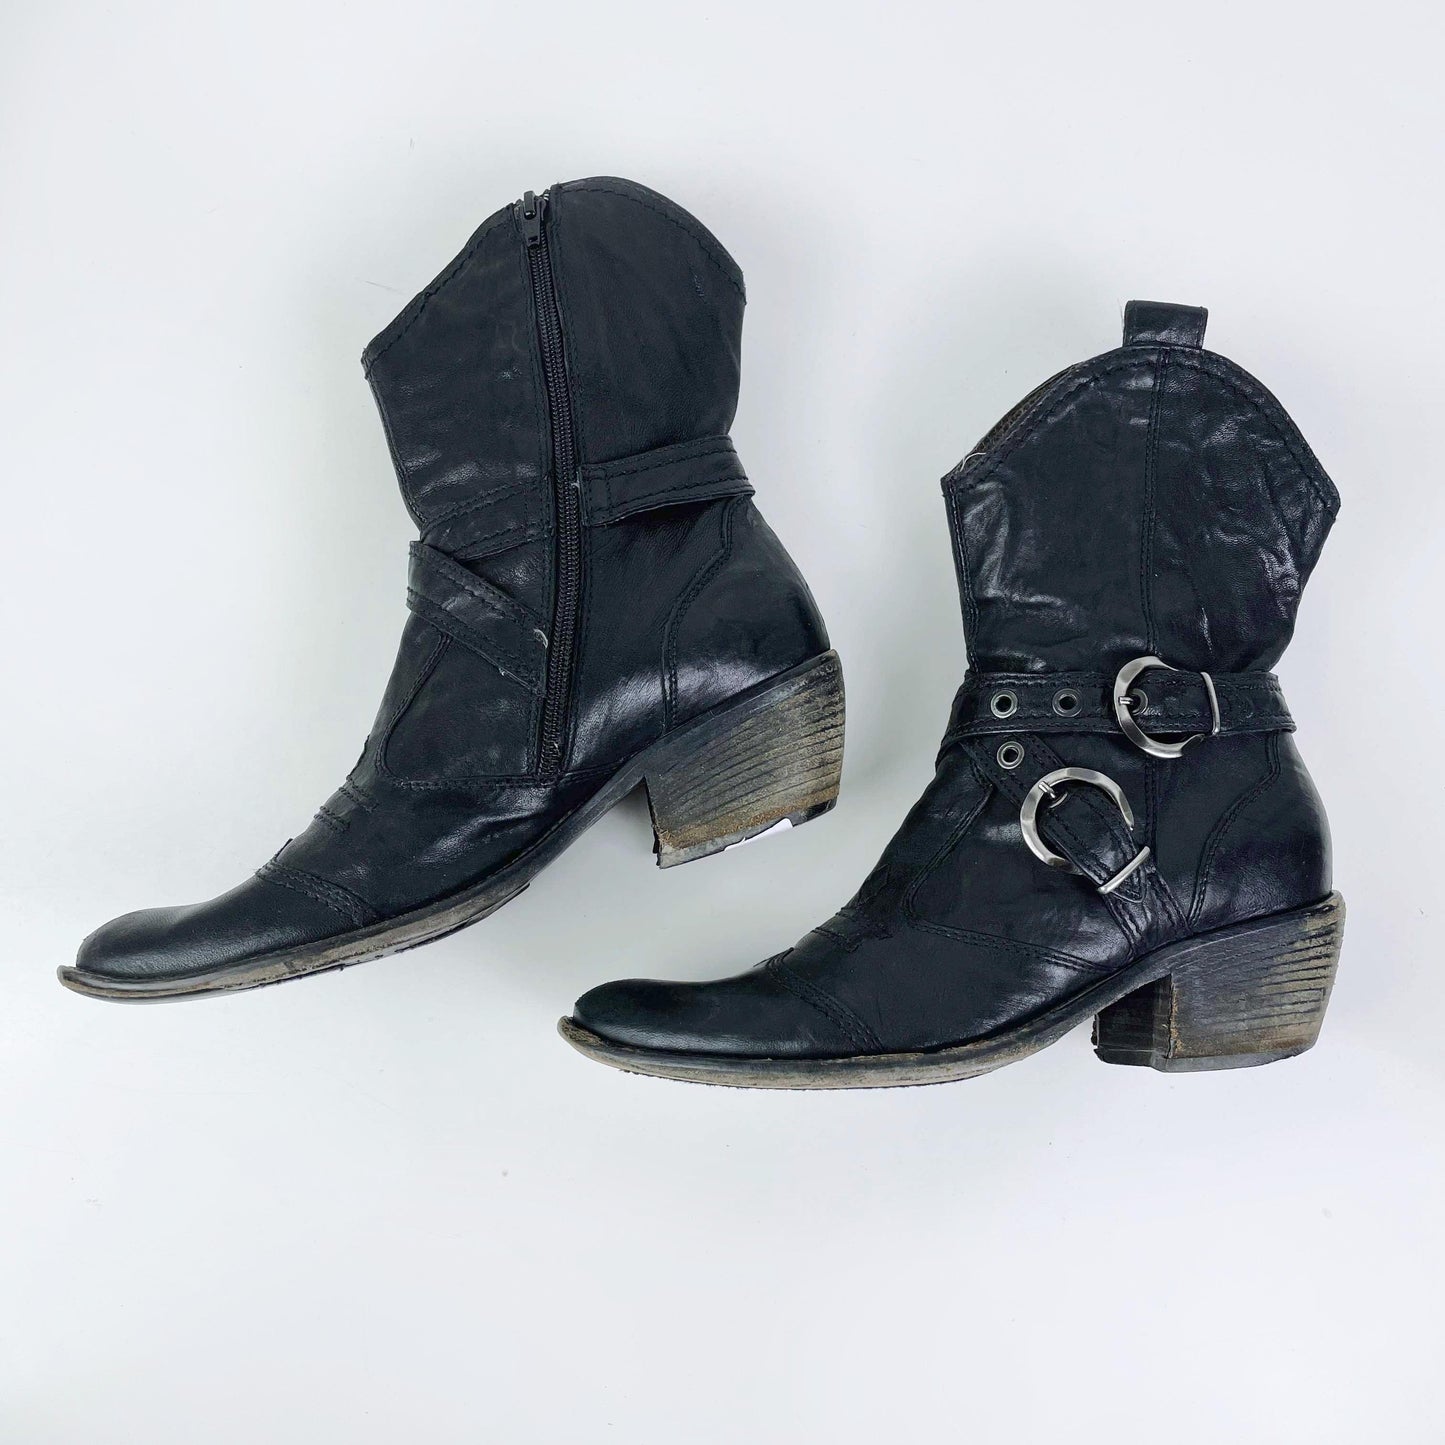 nero giardini black leather western boots - size 39